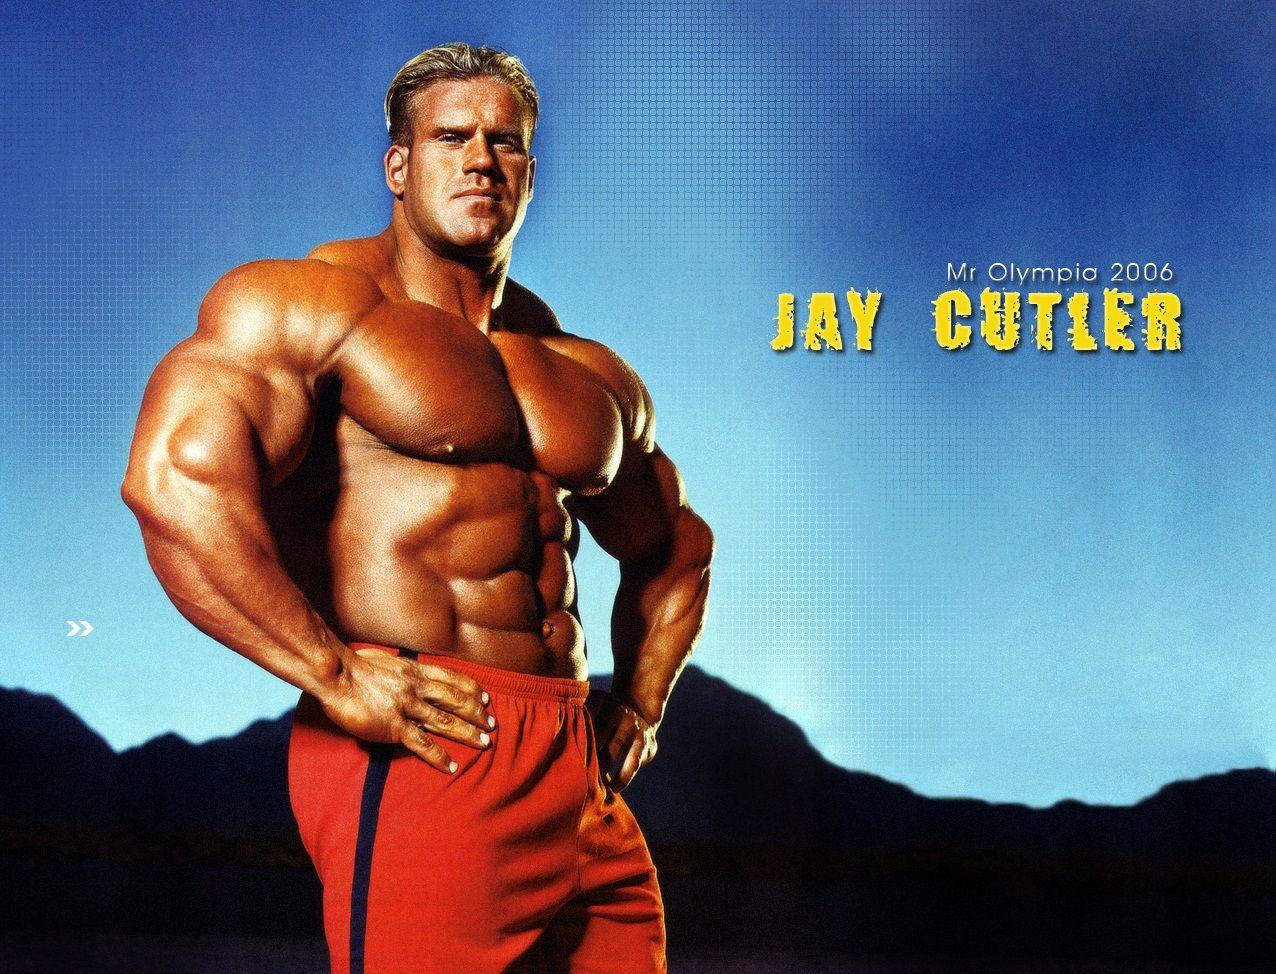 jay cutler bodybuilder today